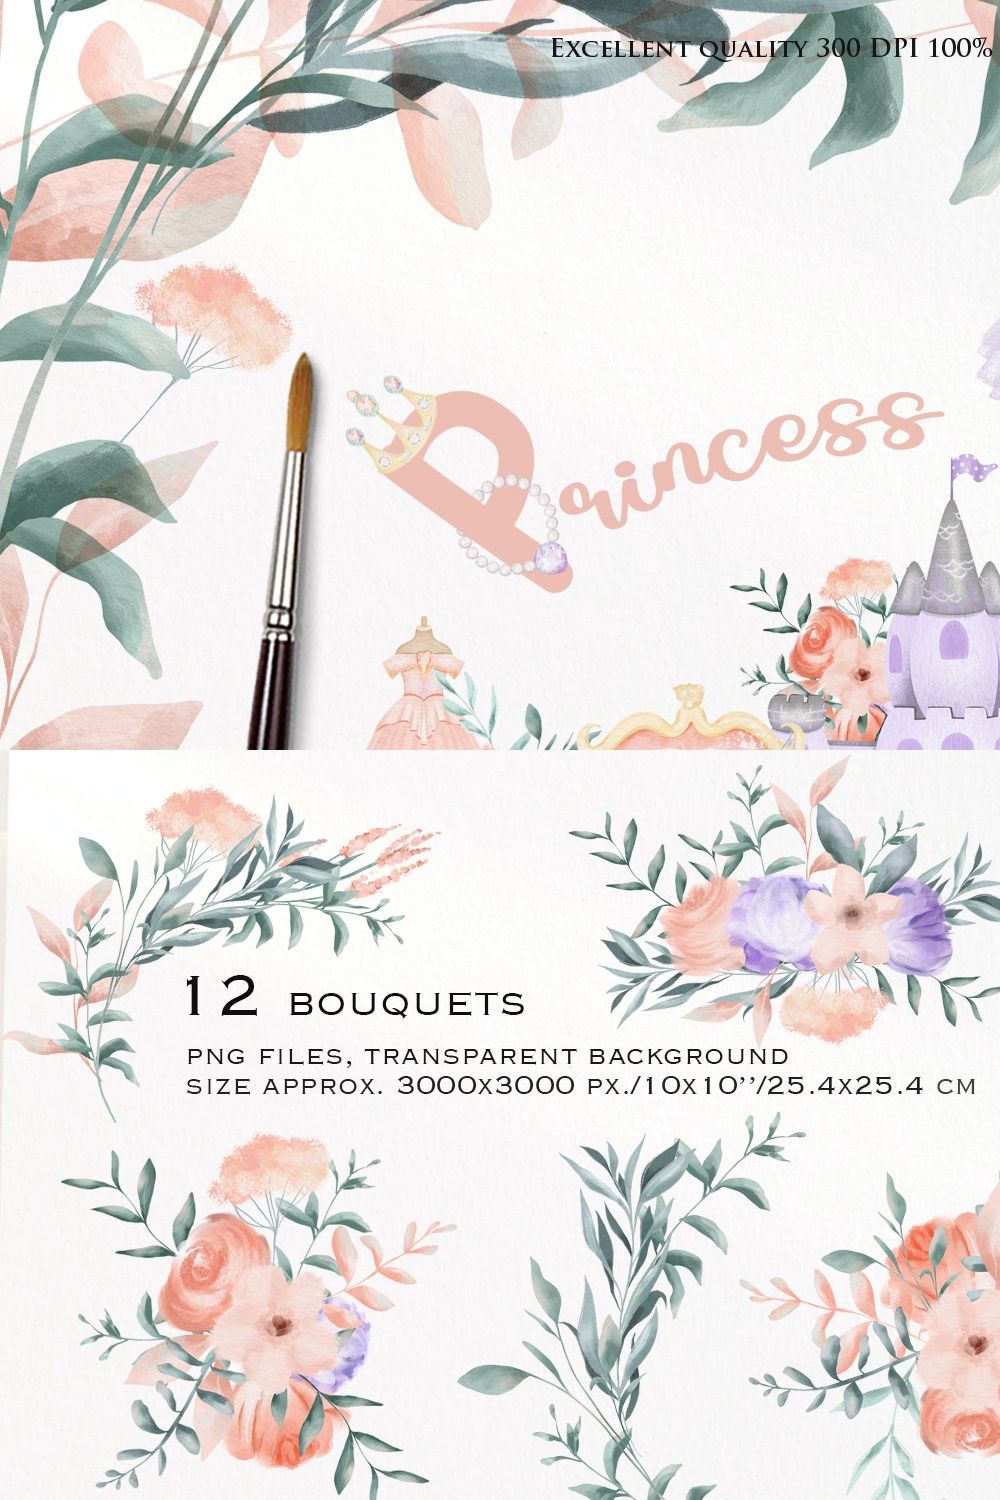 Princess dream pinterest preview image.